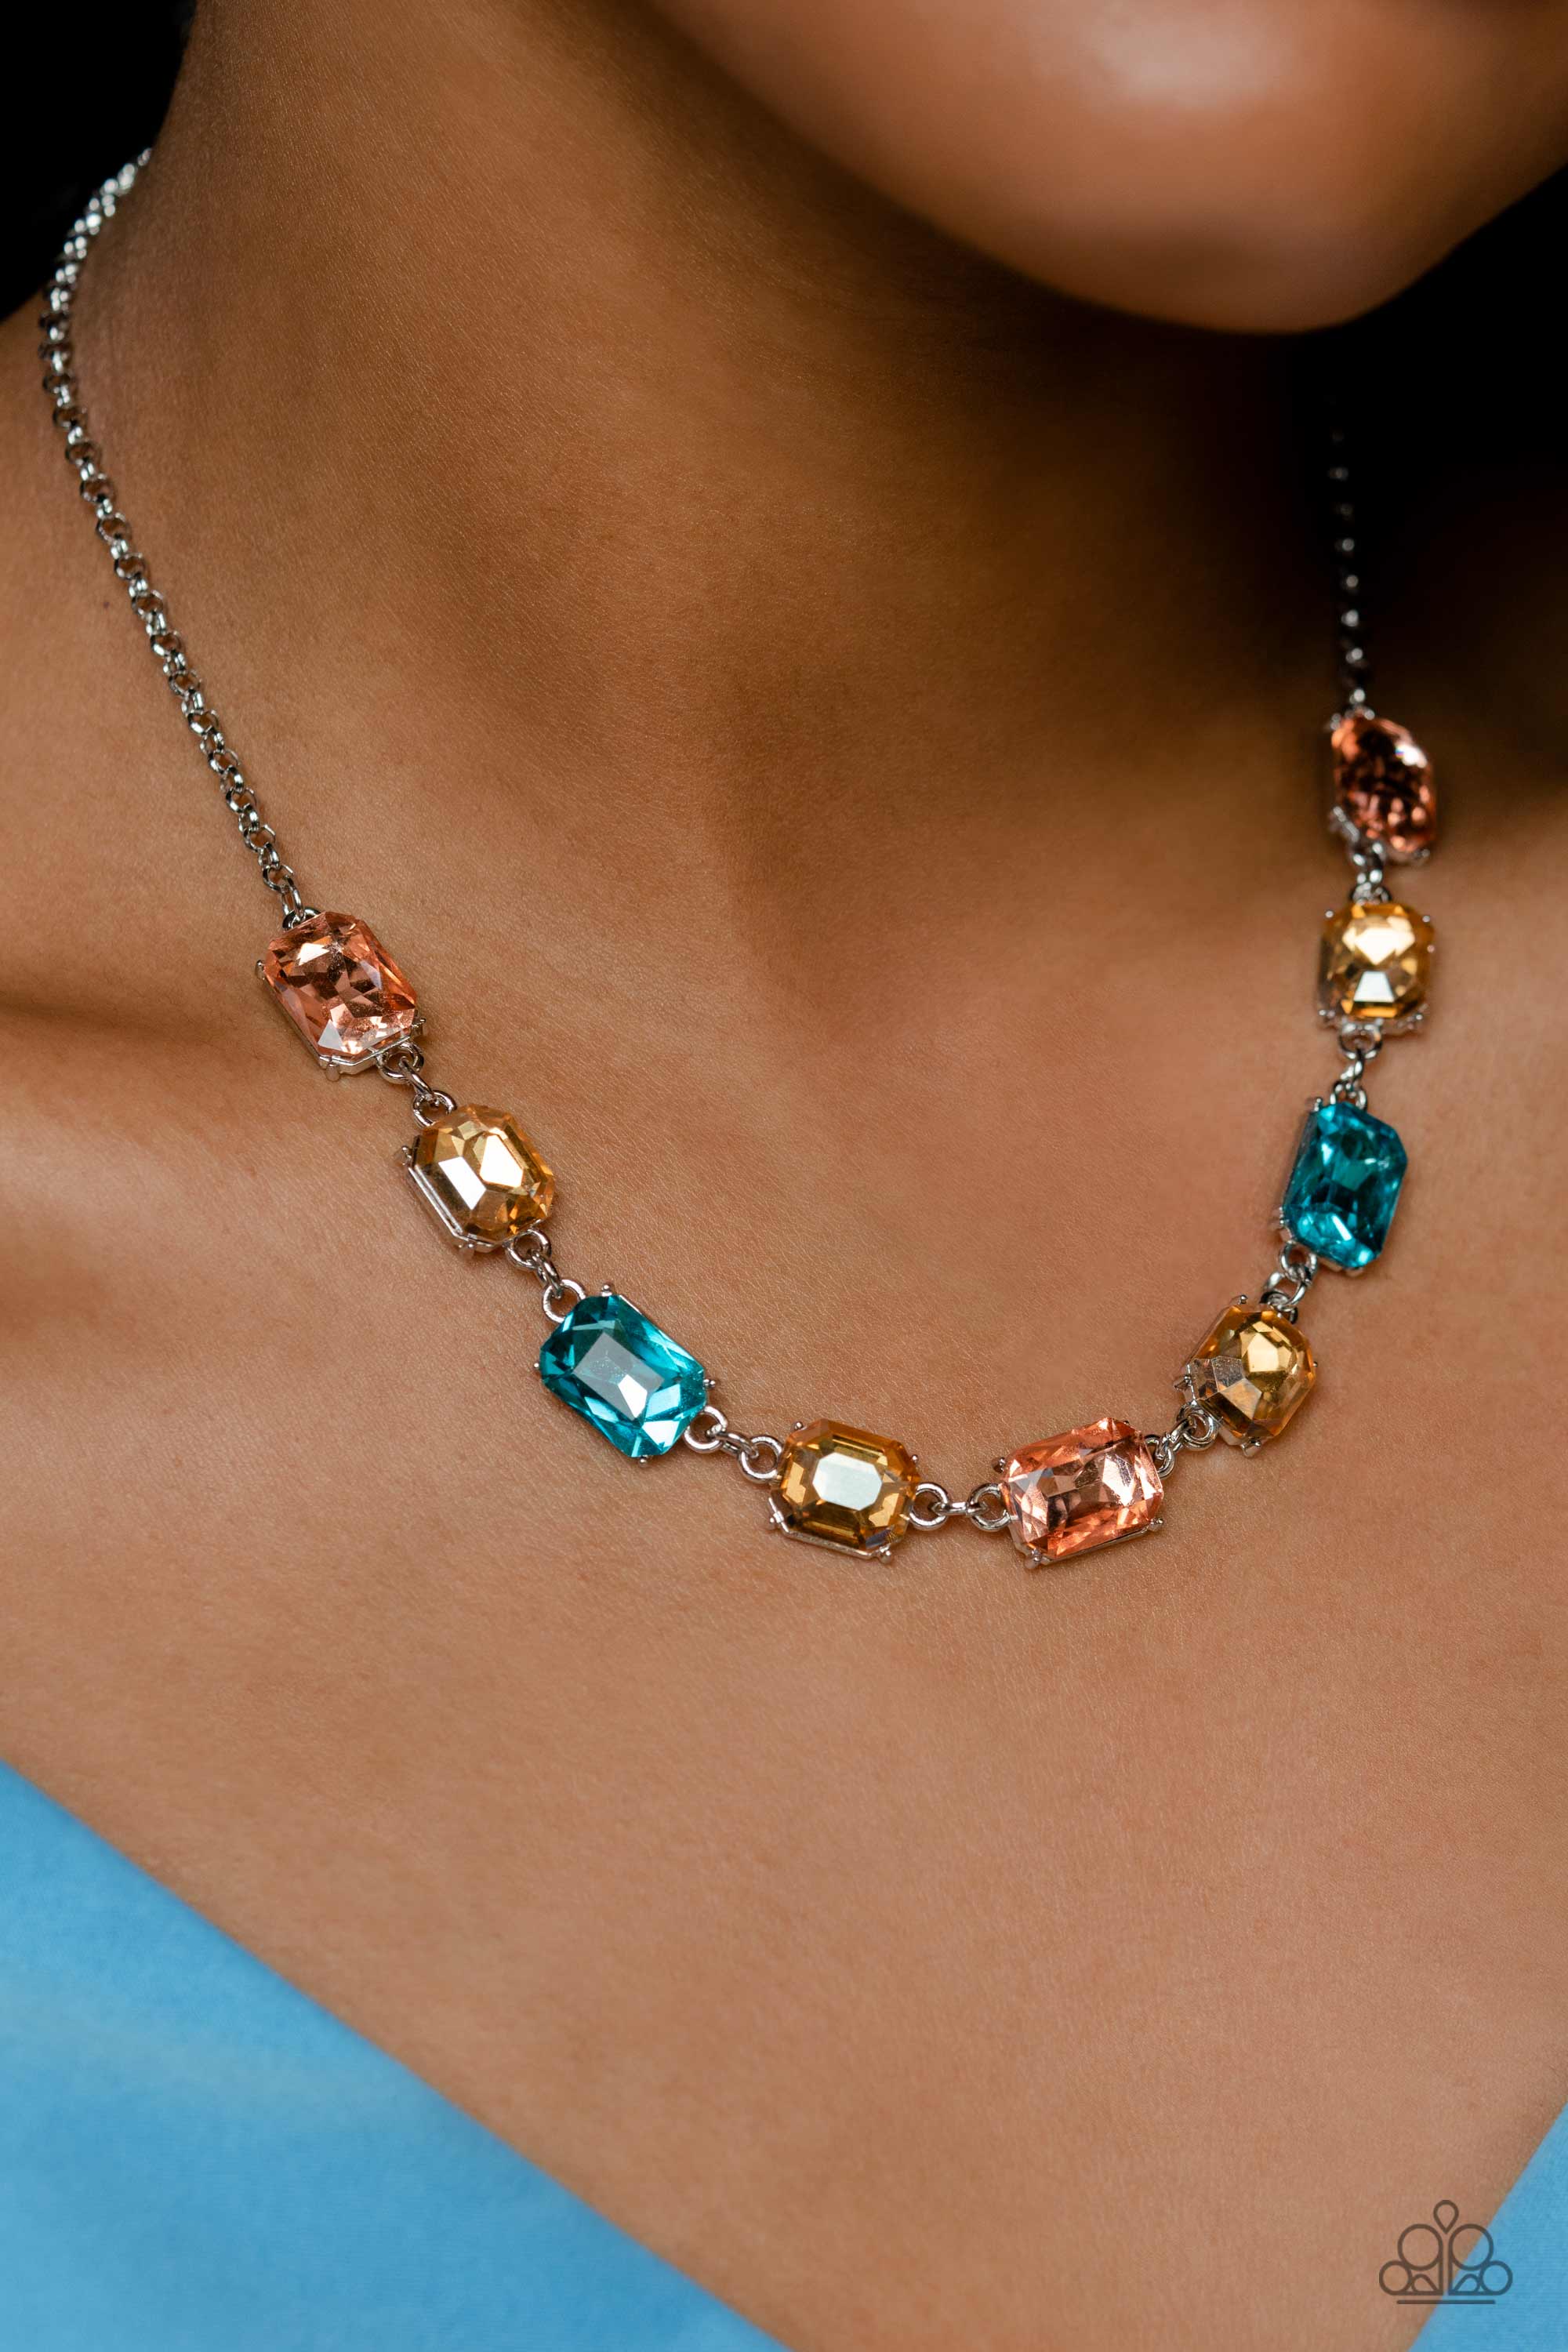 Emerald Envy Multi Rhinestone Necklace - Paparazzi Accessories- lightbox - CarasShop.com - $5 Jewelry by Cara Jewels